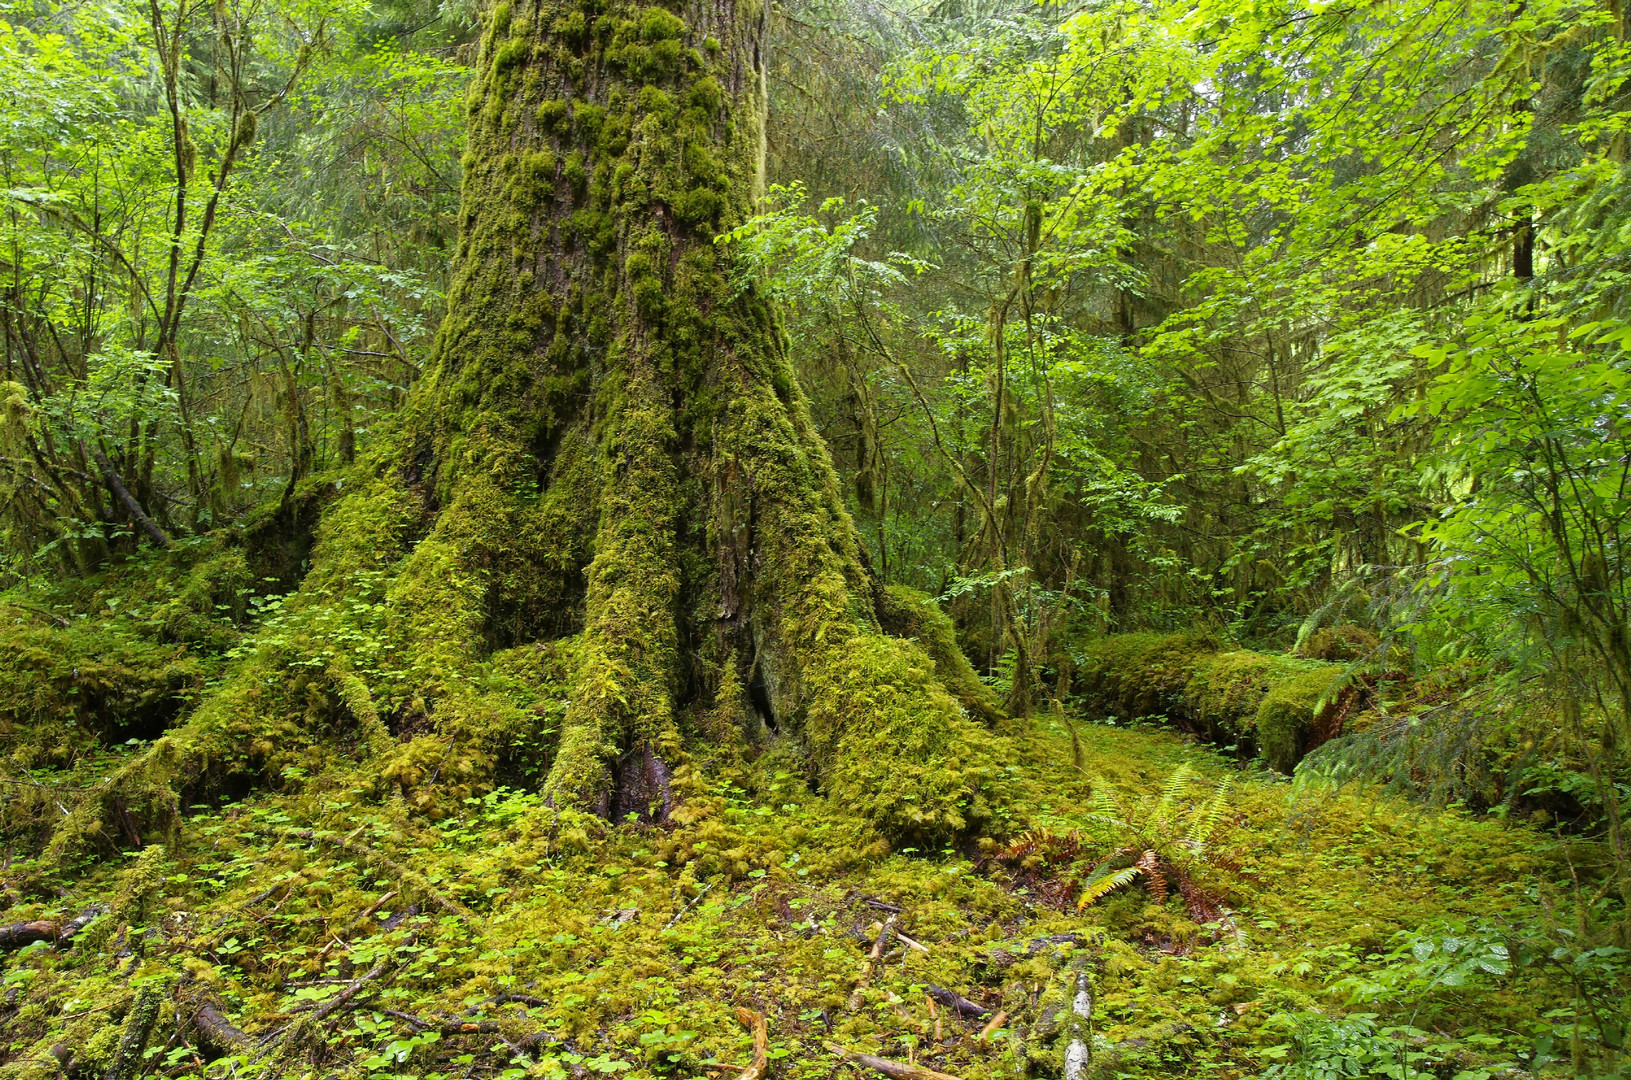 In the Rainforest I (Washington State)